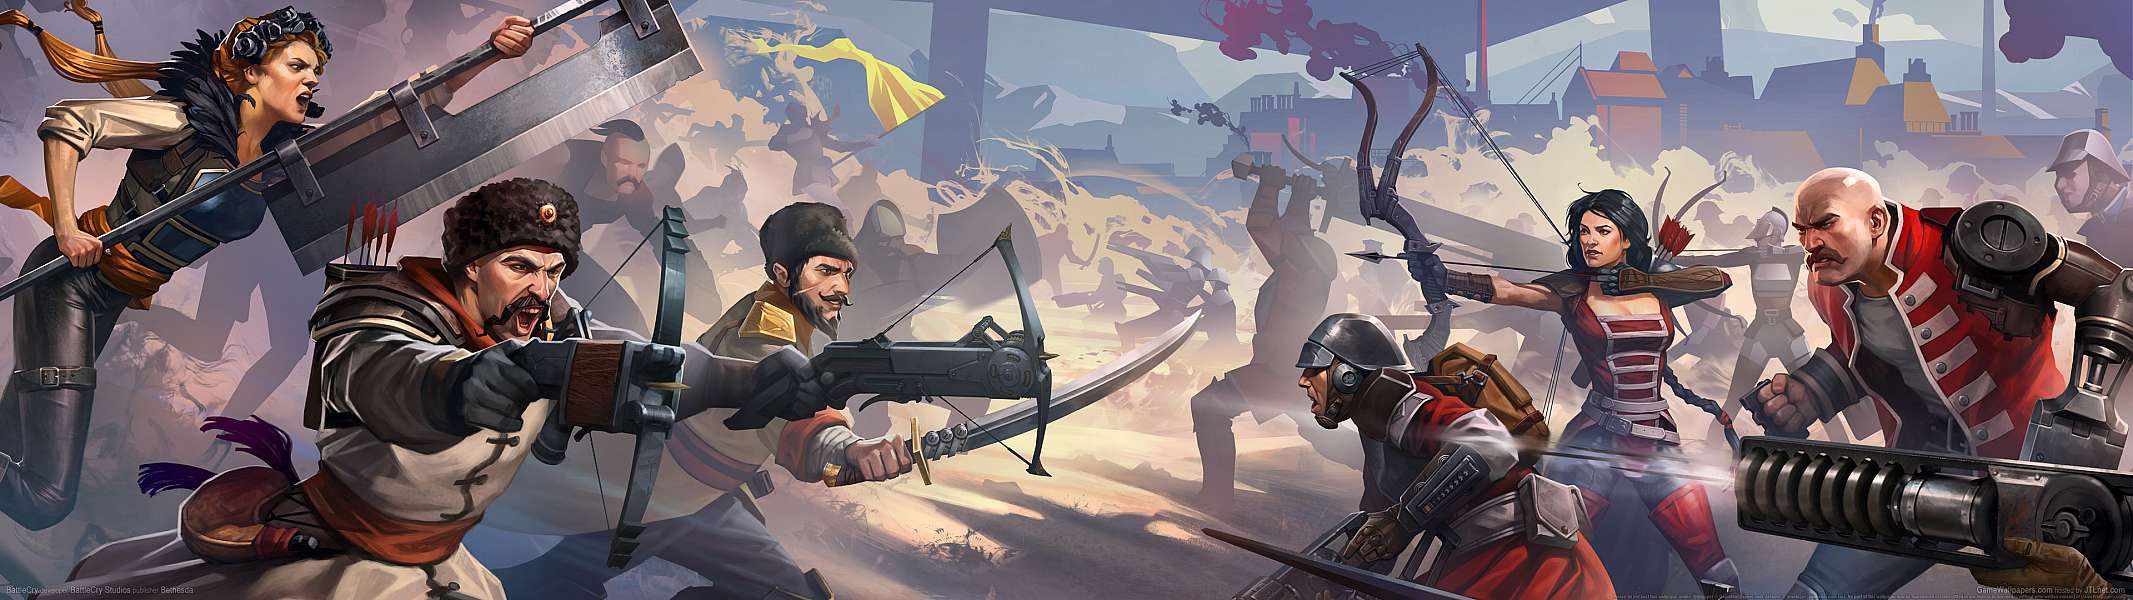 BattleCry dual screen wallpaper or background